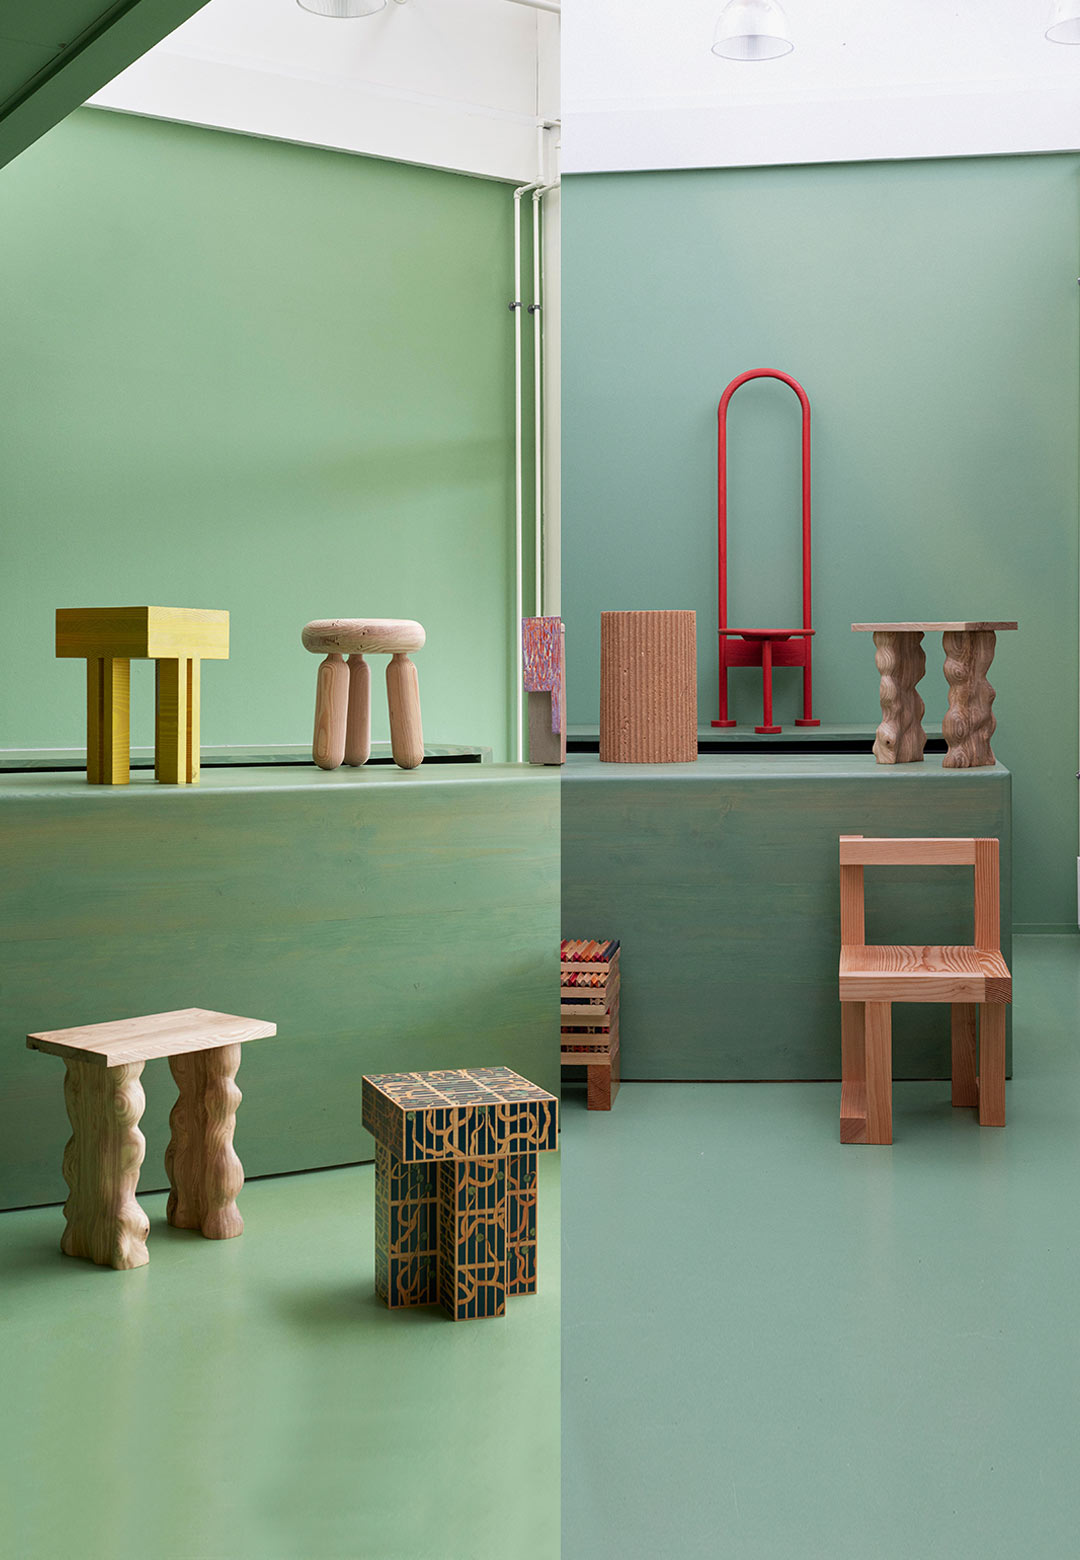 Animated furniture dots Copenhagen Contemporary’s new in-house café